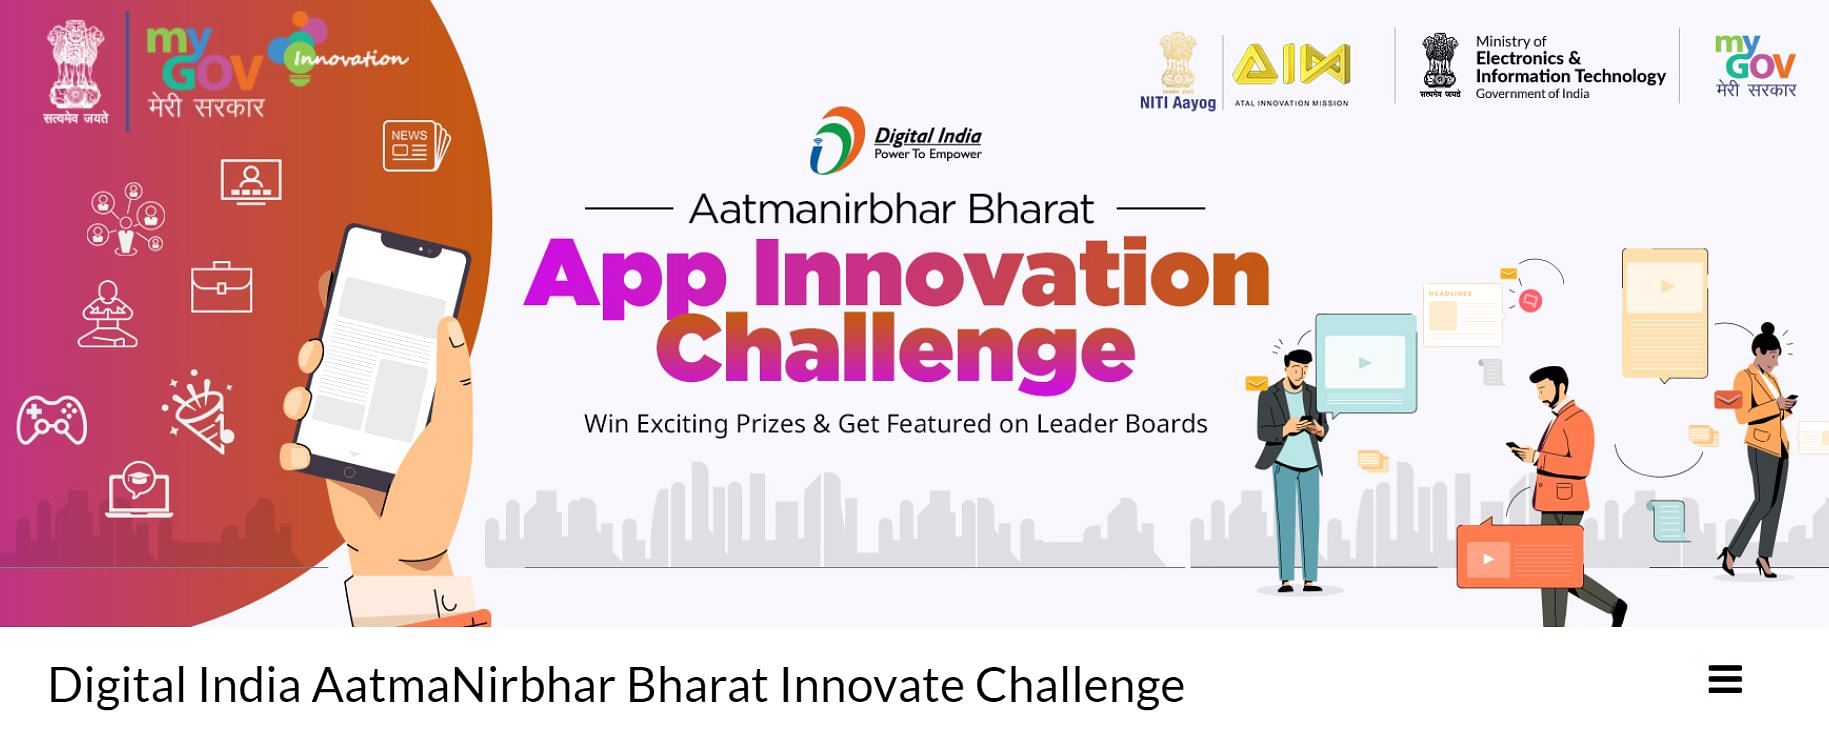 MyGov's App Innovation Challenge website (screen-grab)